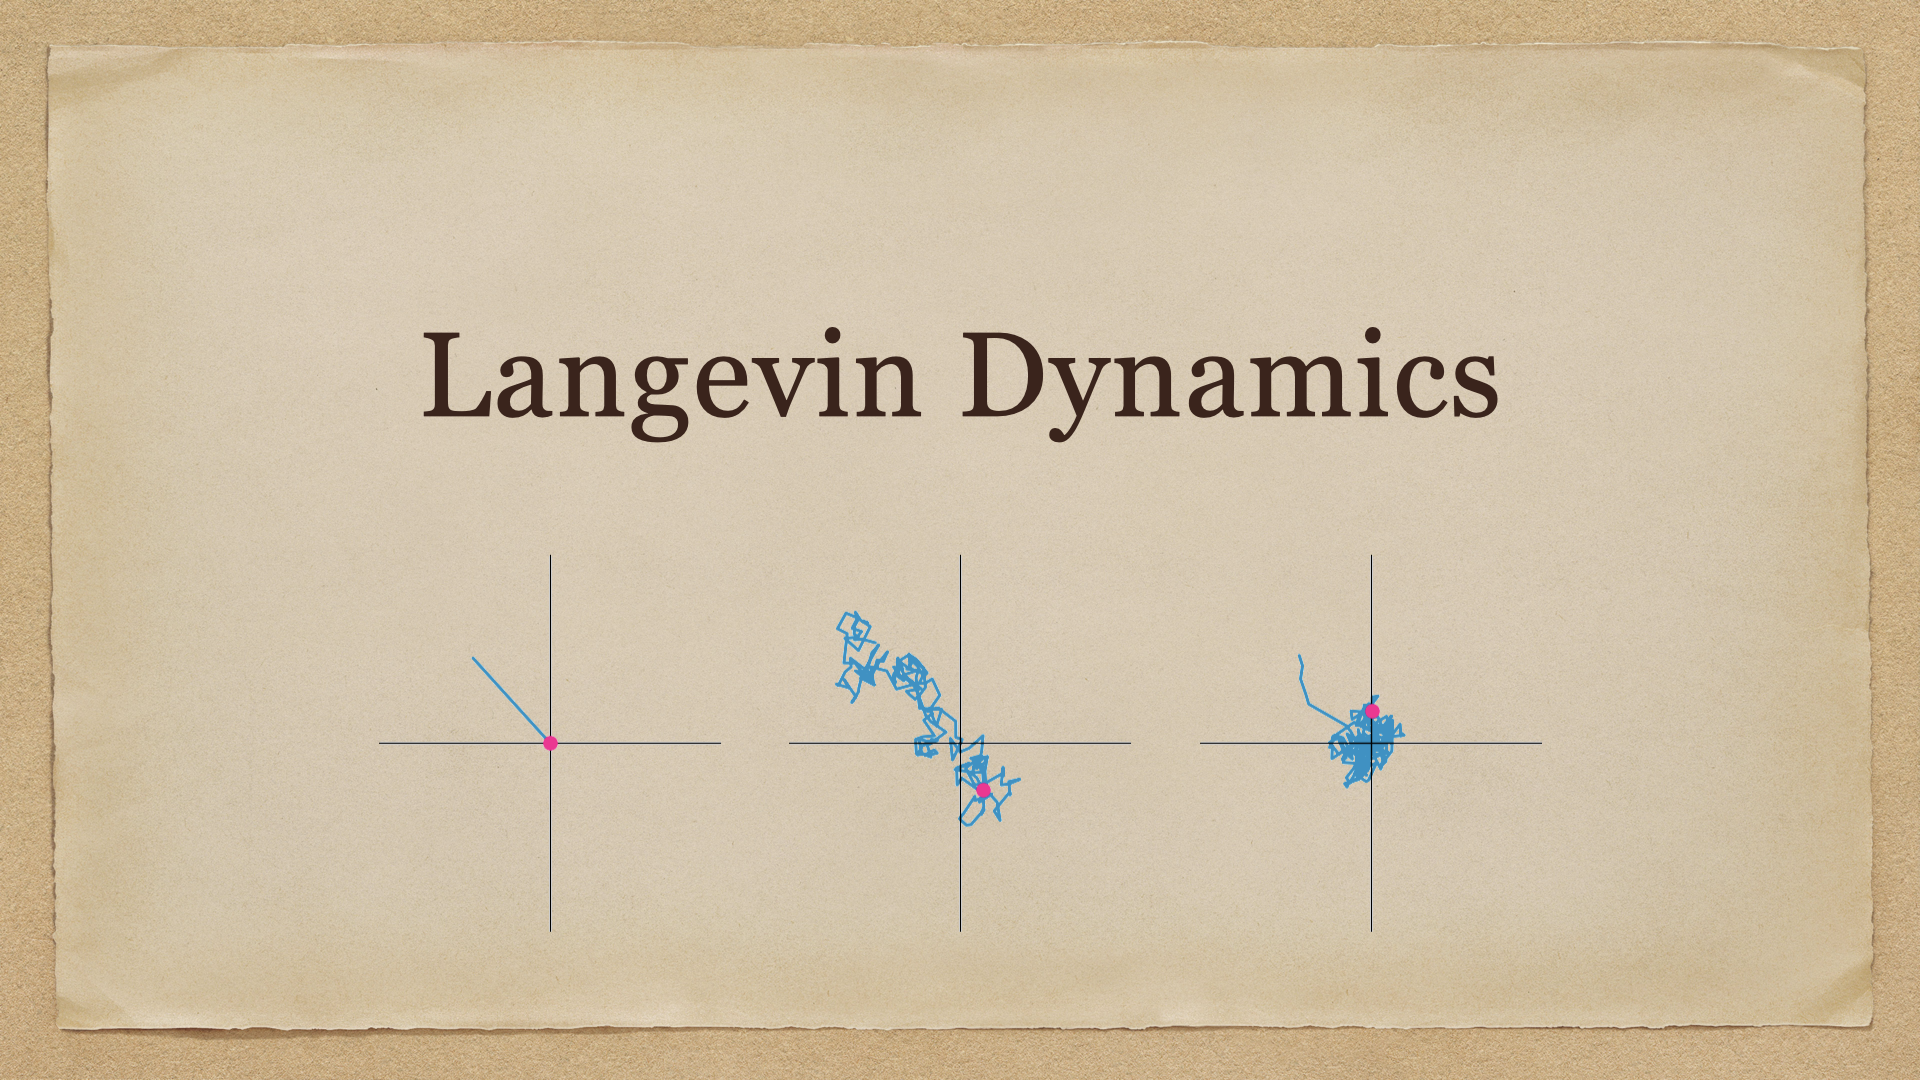 Langevin Dynamics